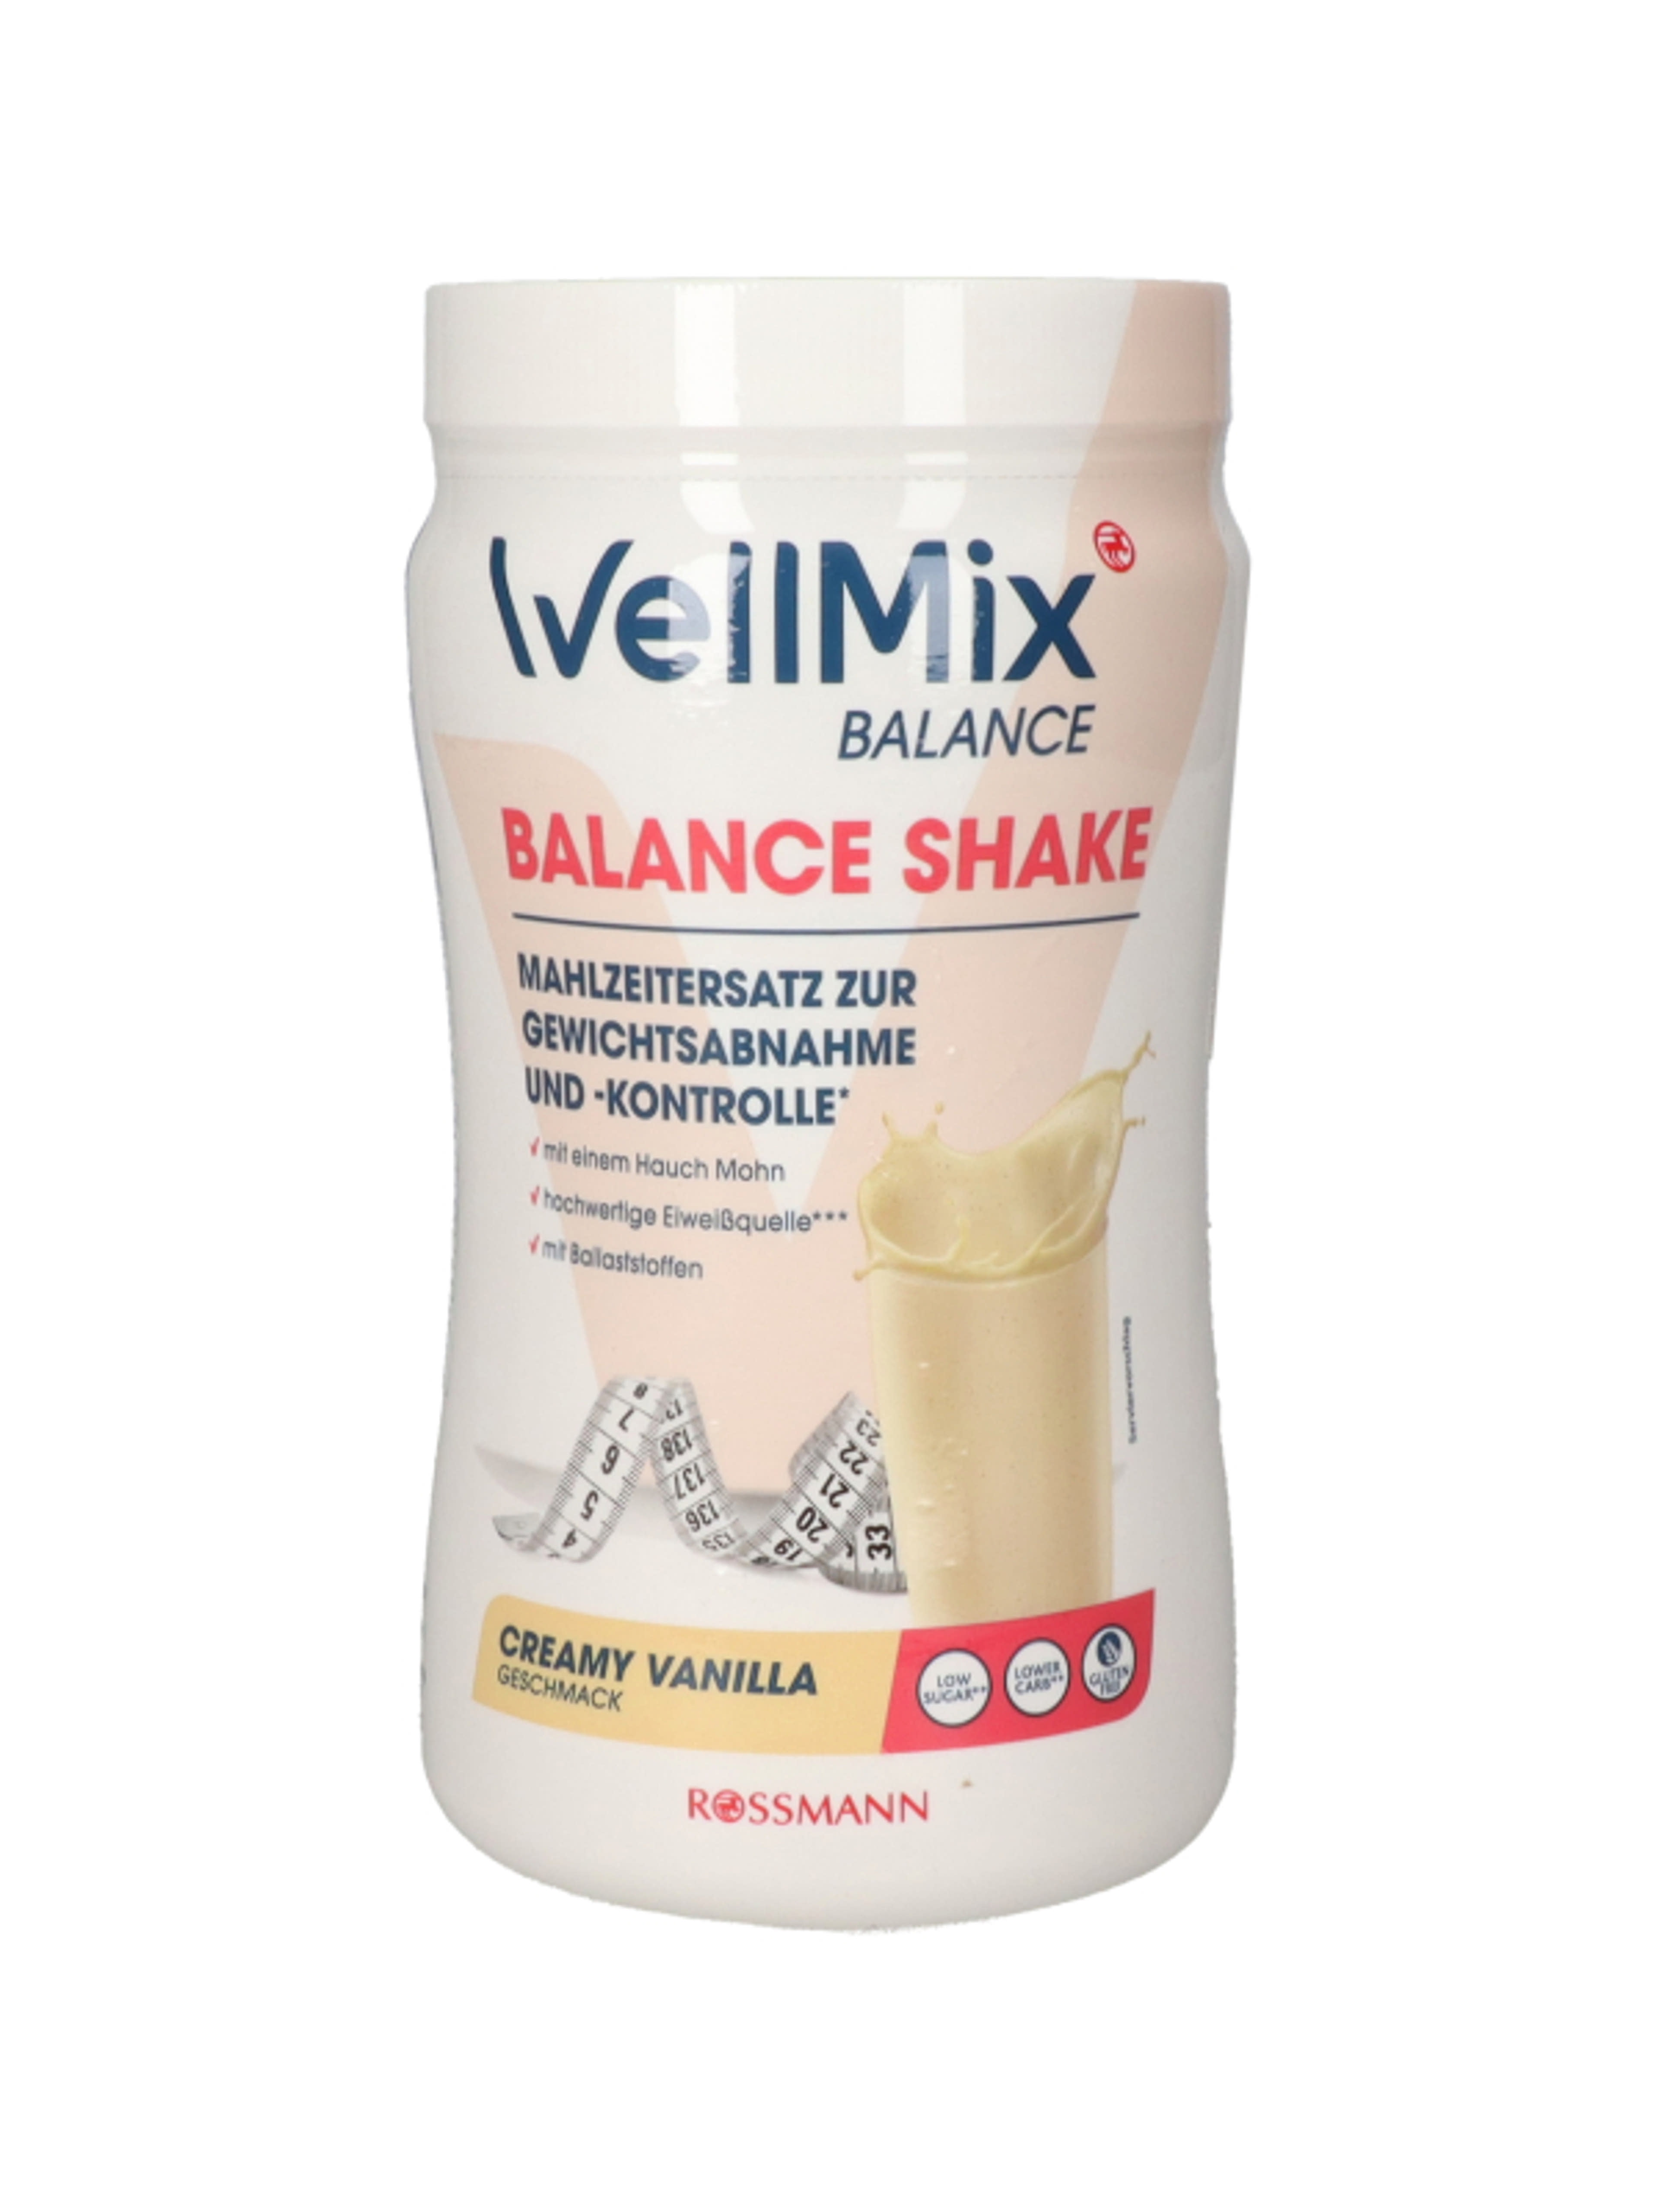 Well Mix Balance Vanille Shake - 350 g-2